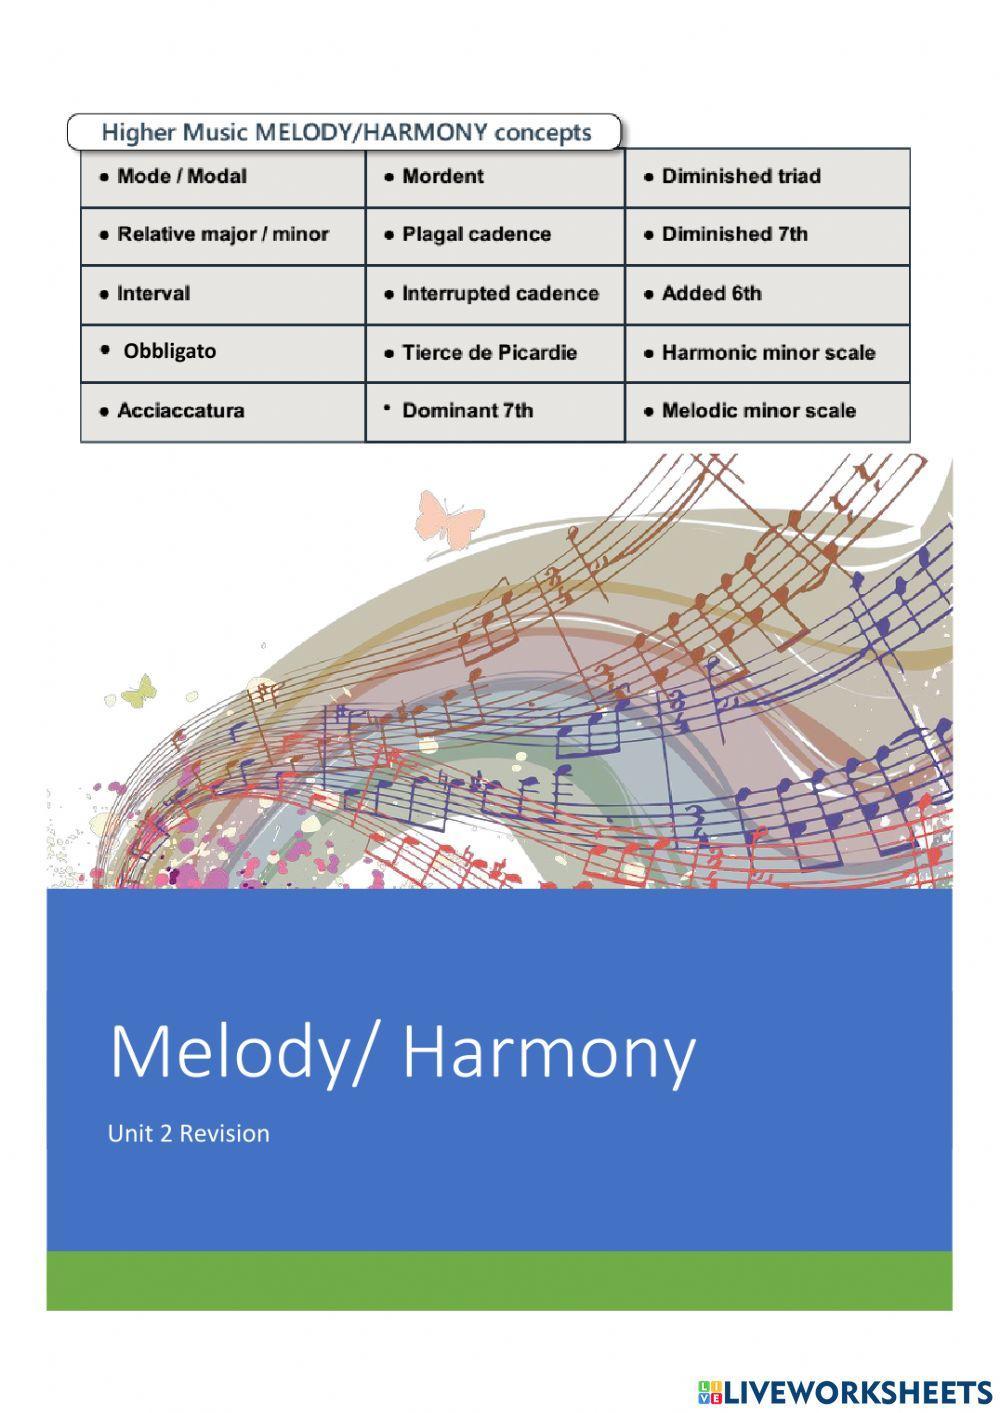 Higher Melody Harmony Quiz